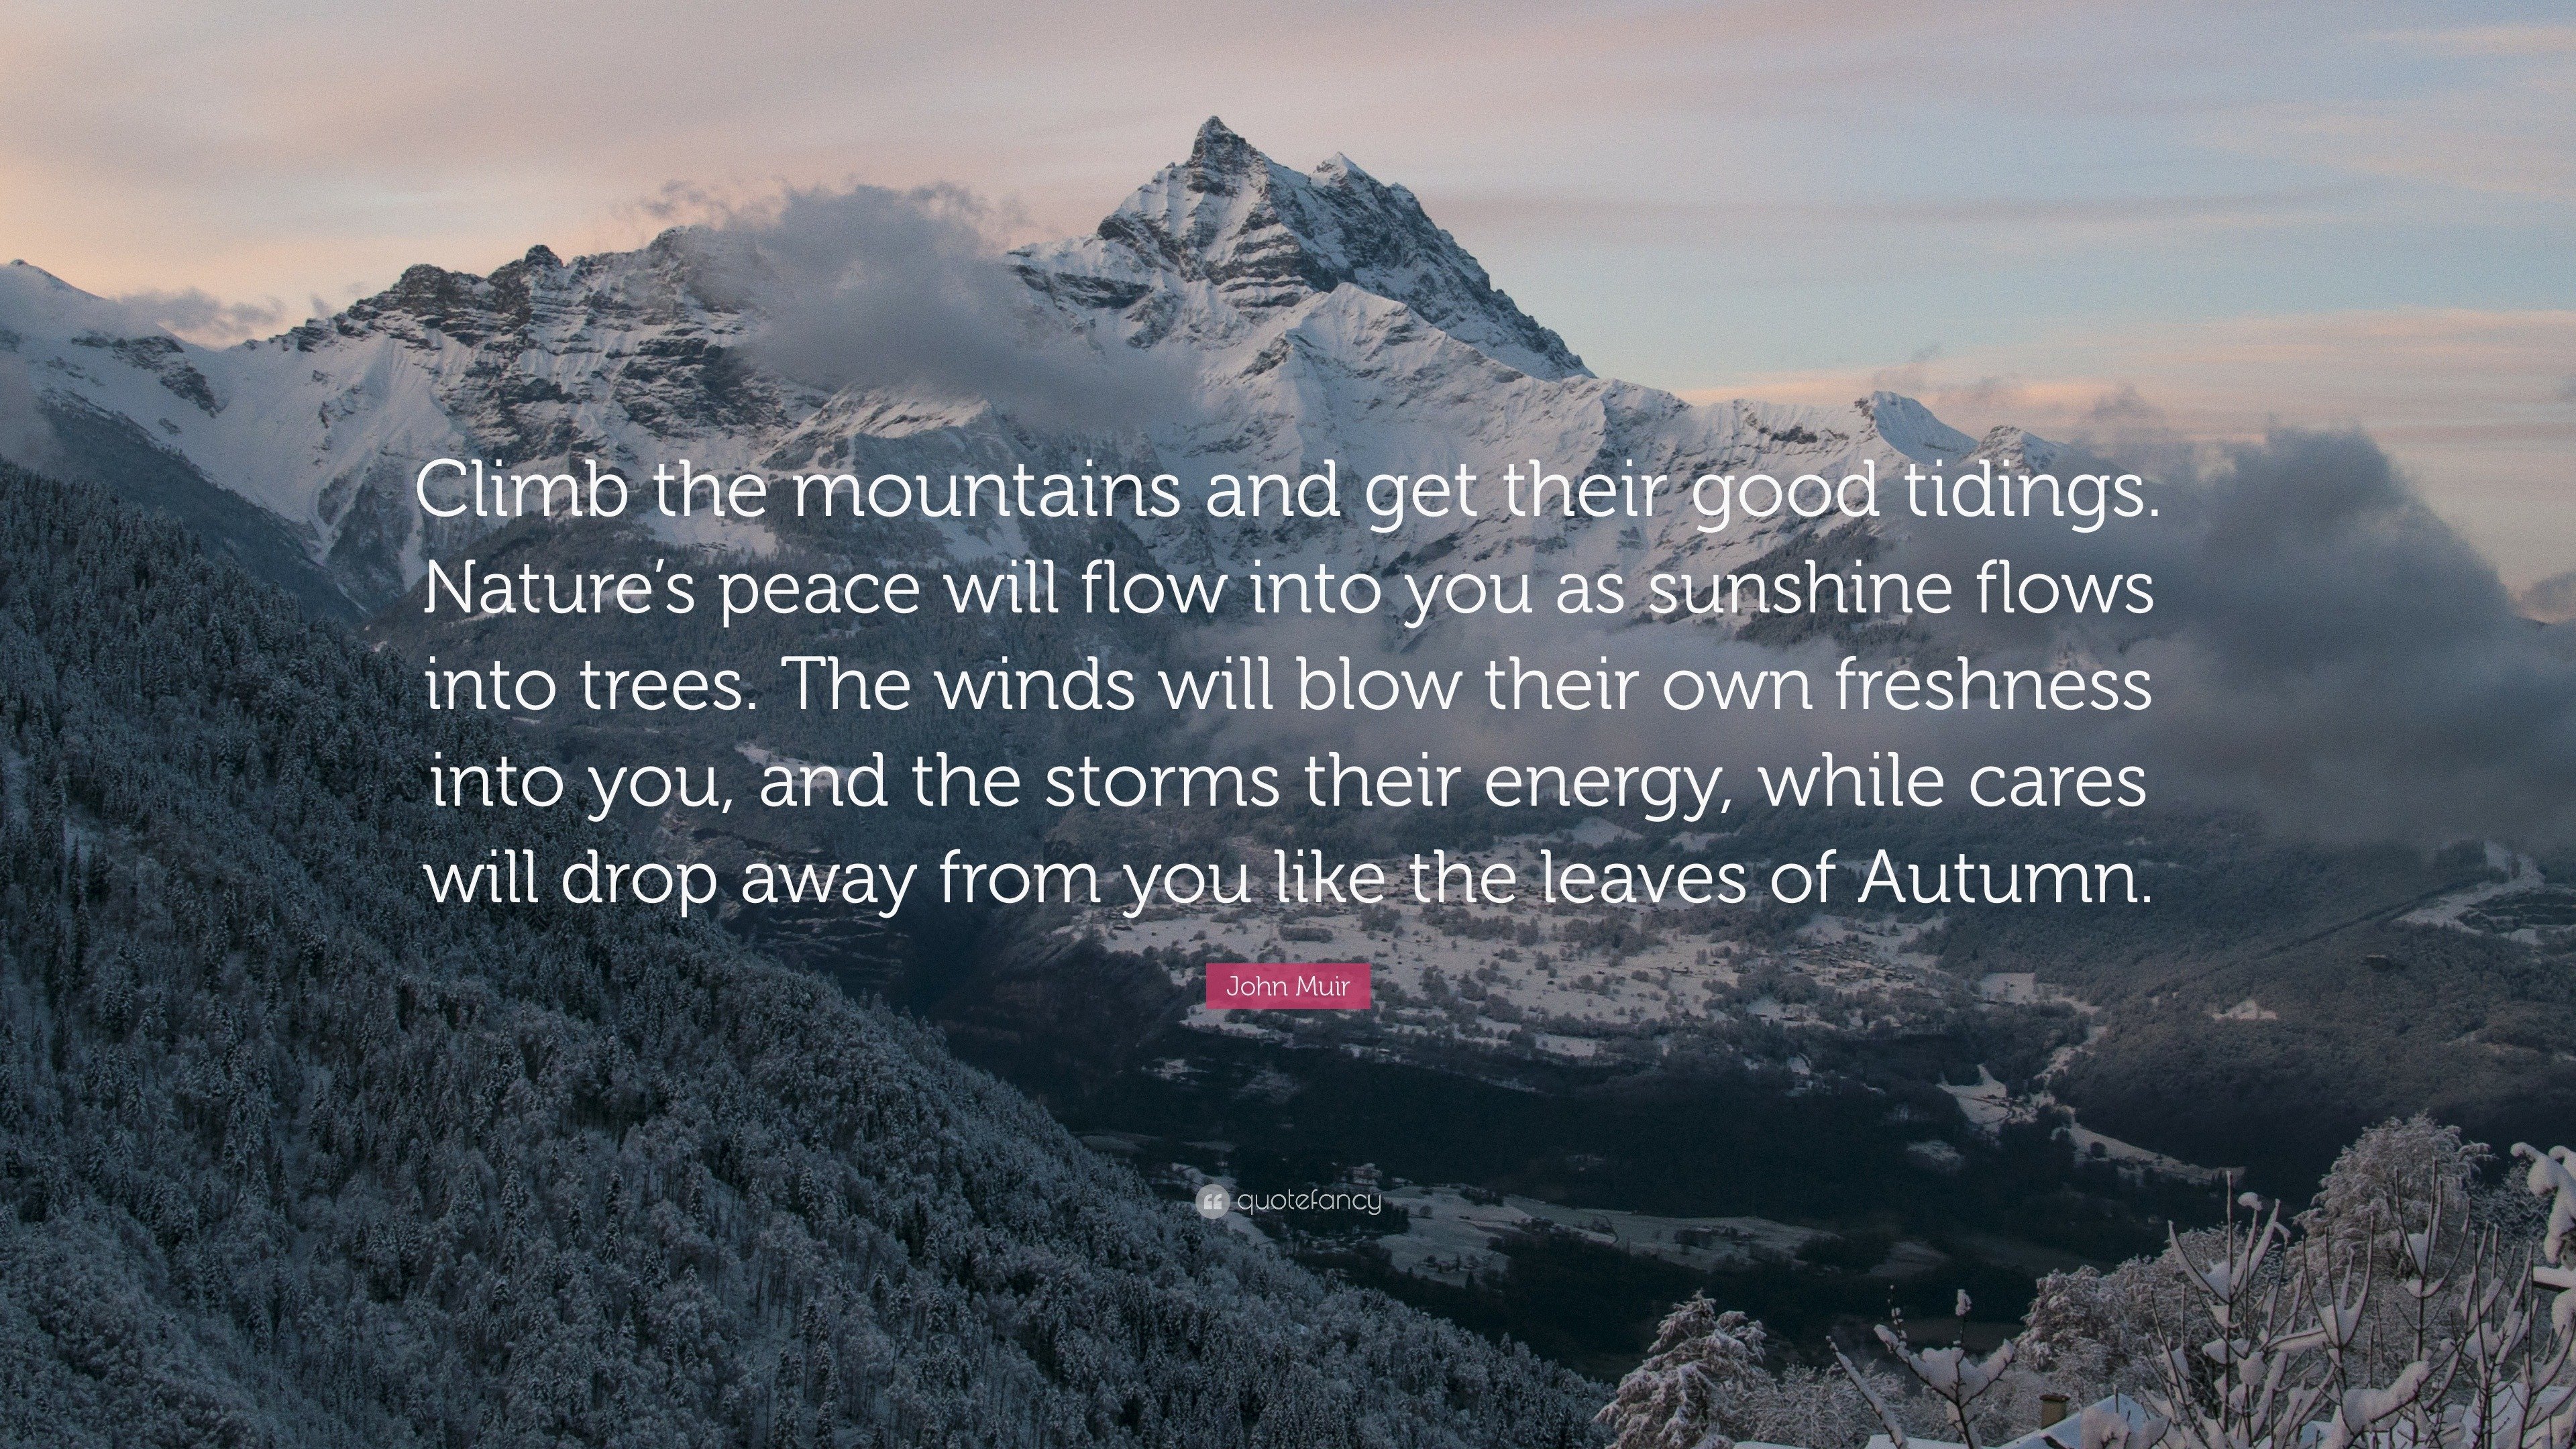 John Muir Quote: “Climb the mountains